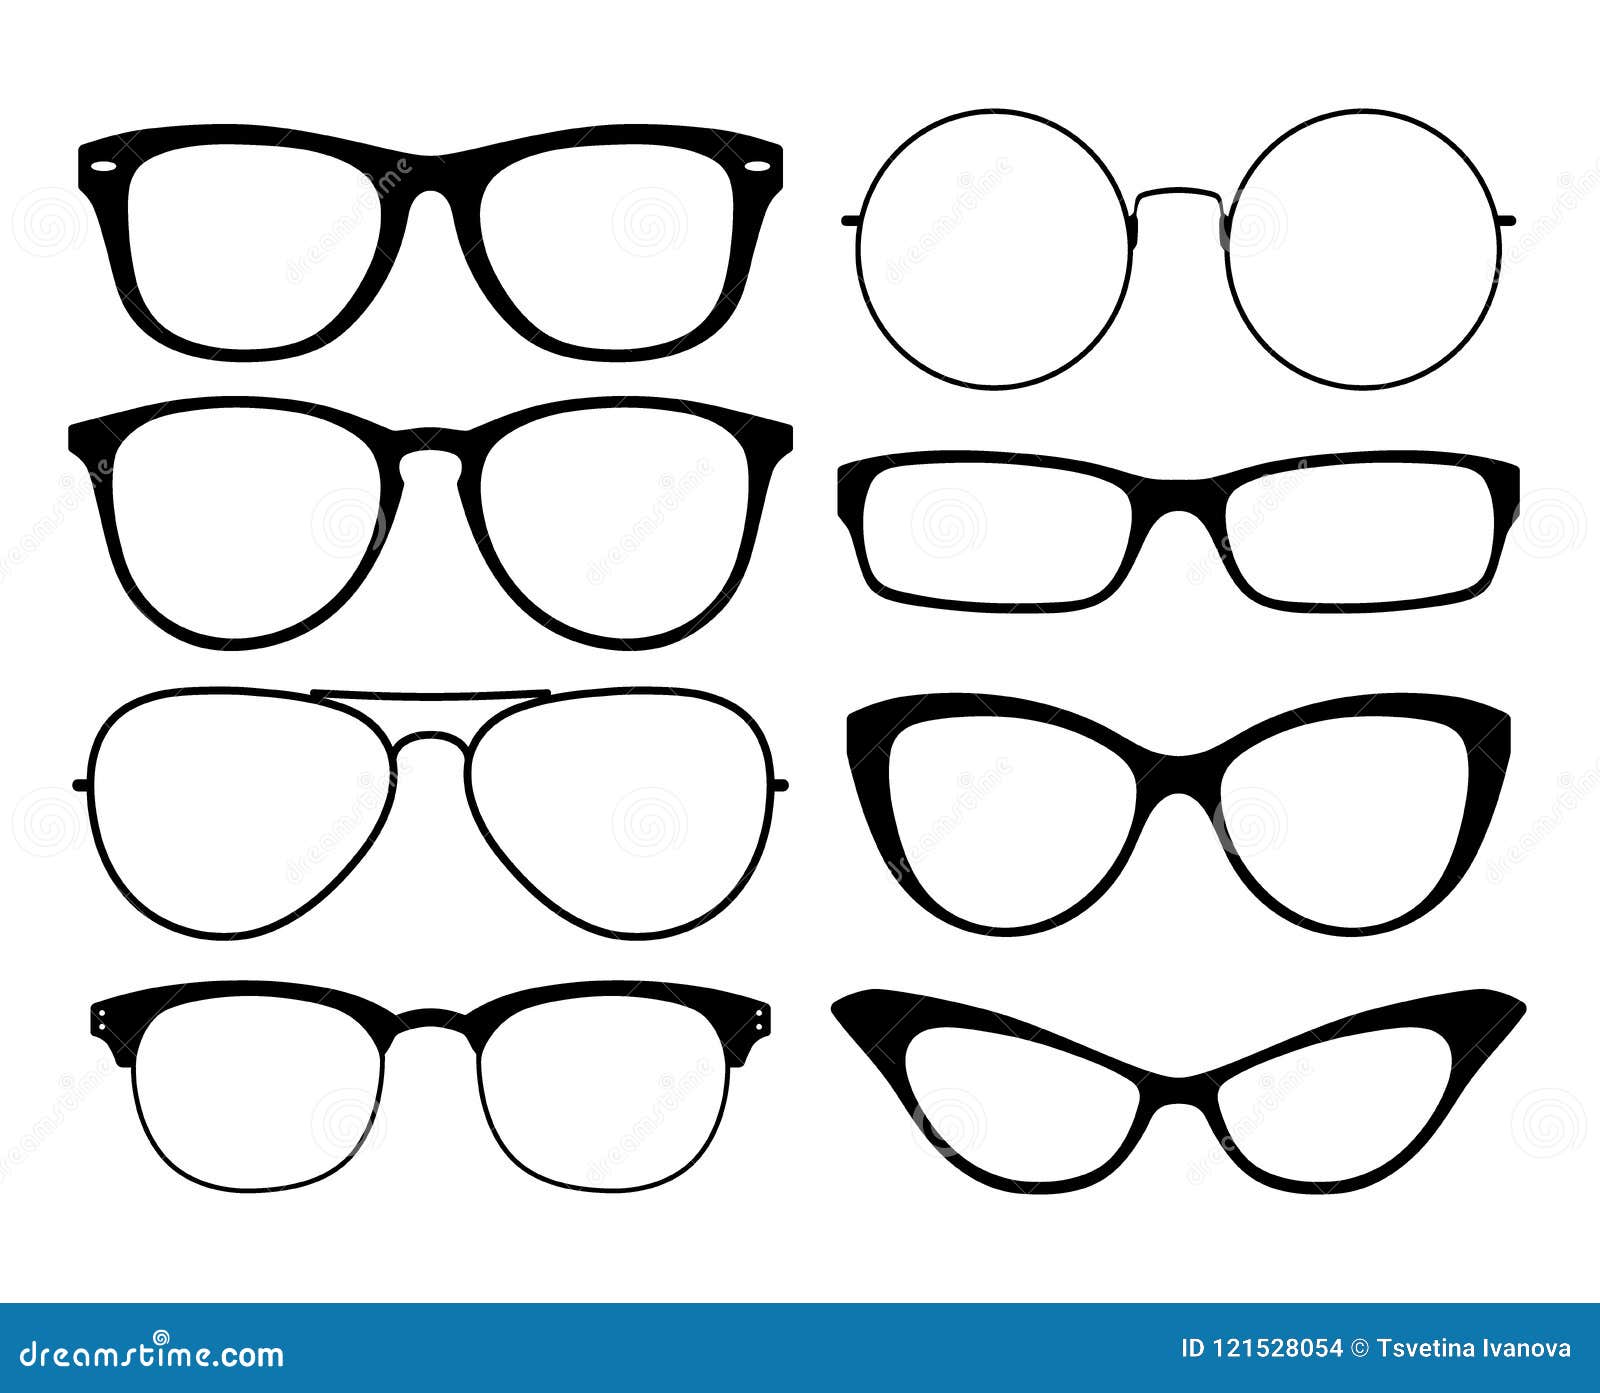 various black silhouete glasses. eyeglasses frames set.